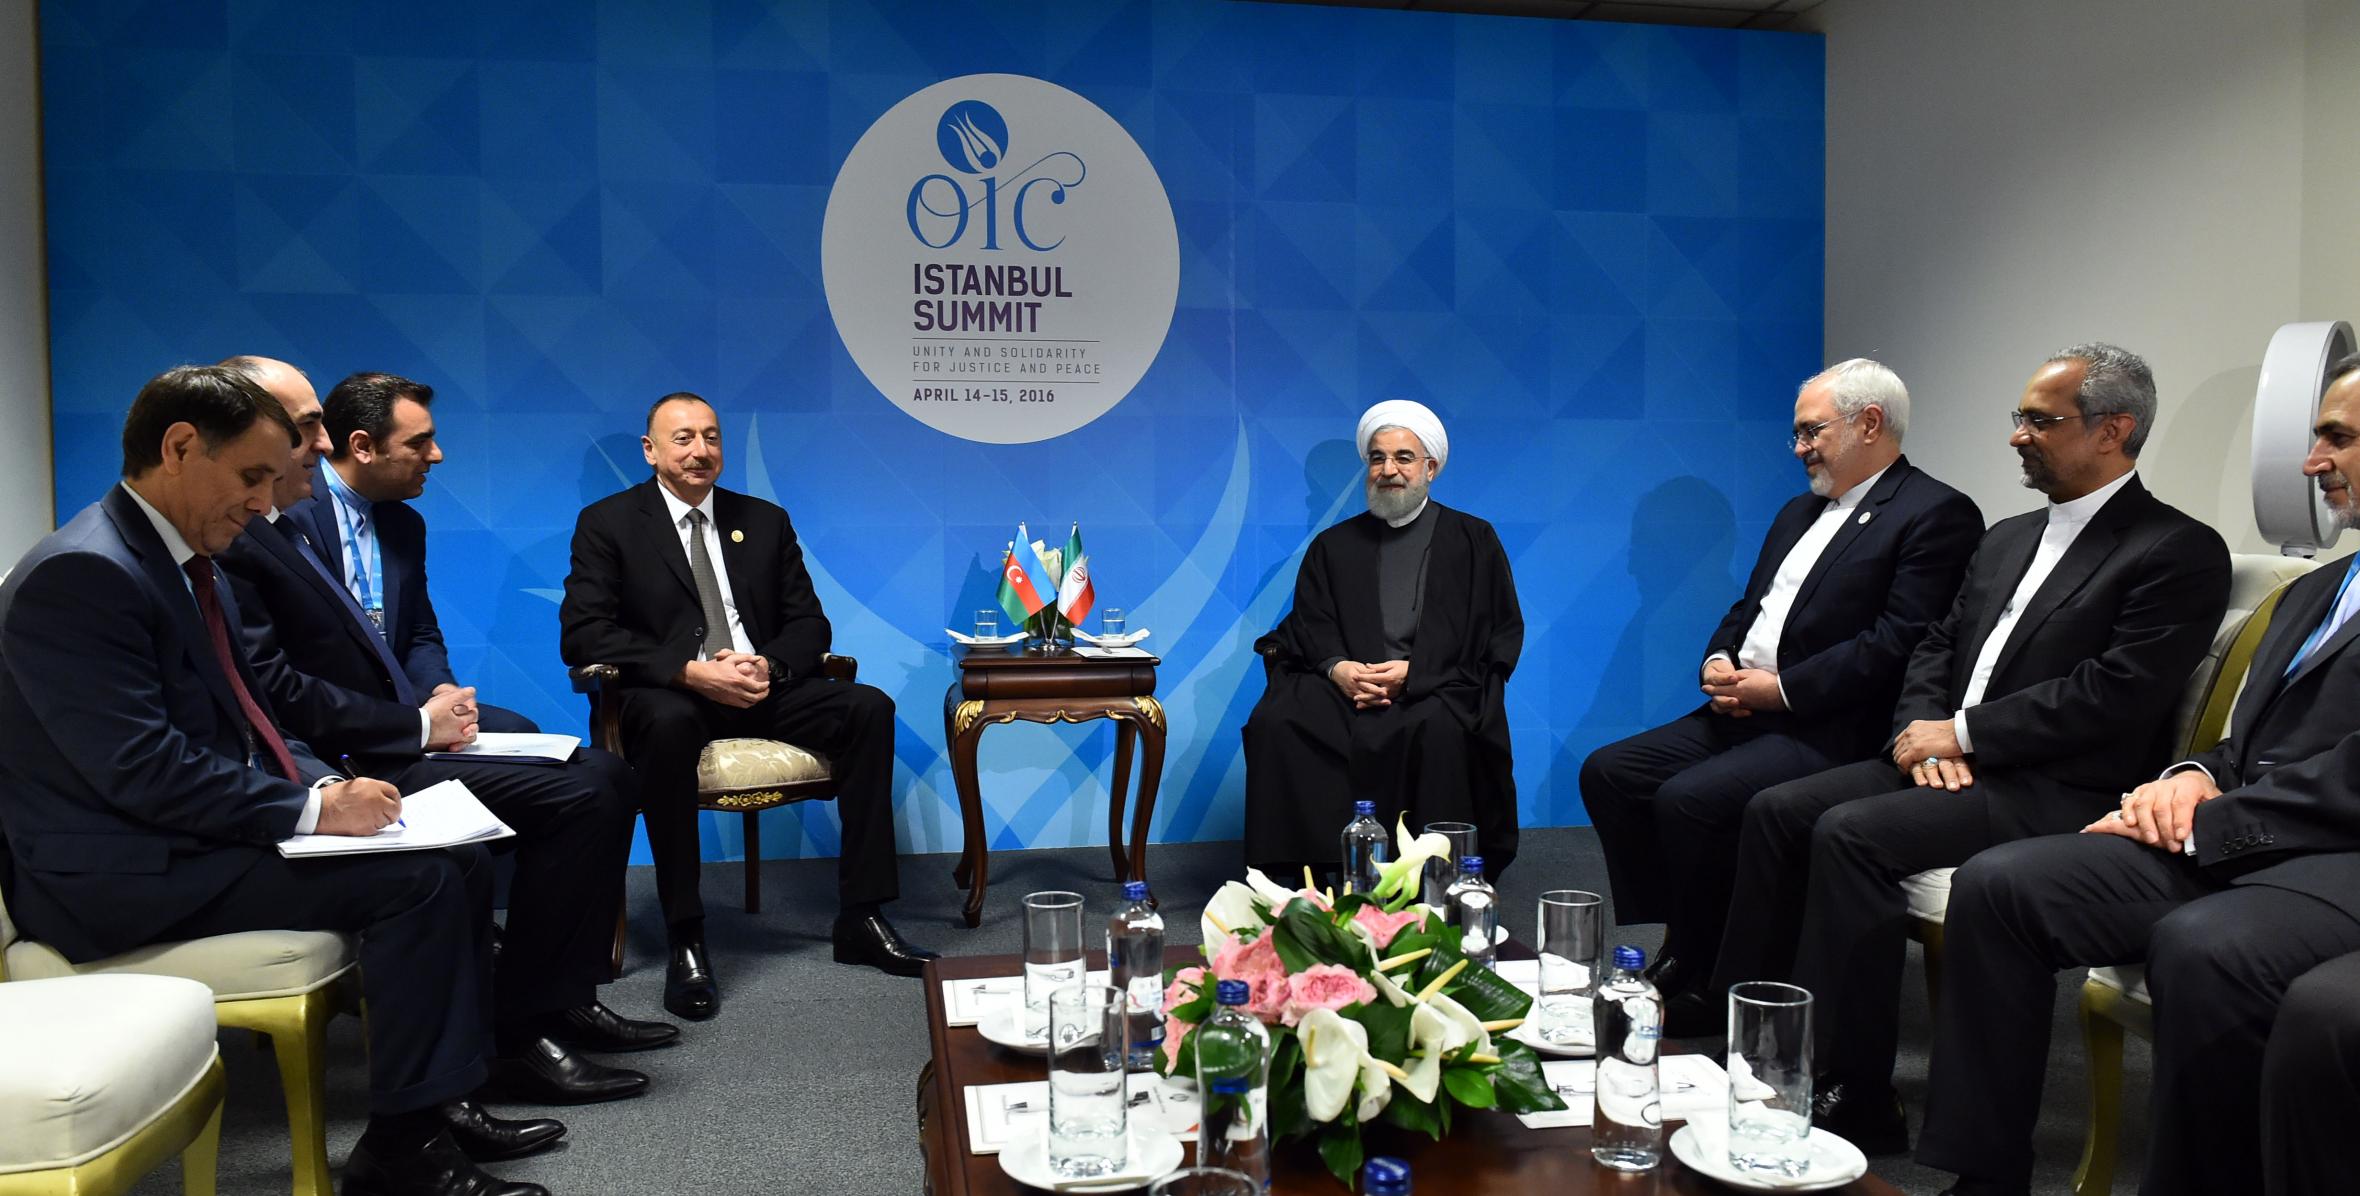 Ilham Aliyev met with President of Iran Hassan Rouhani